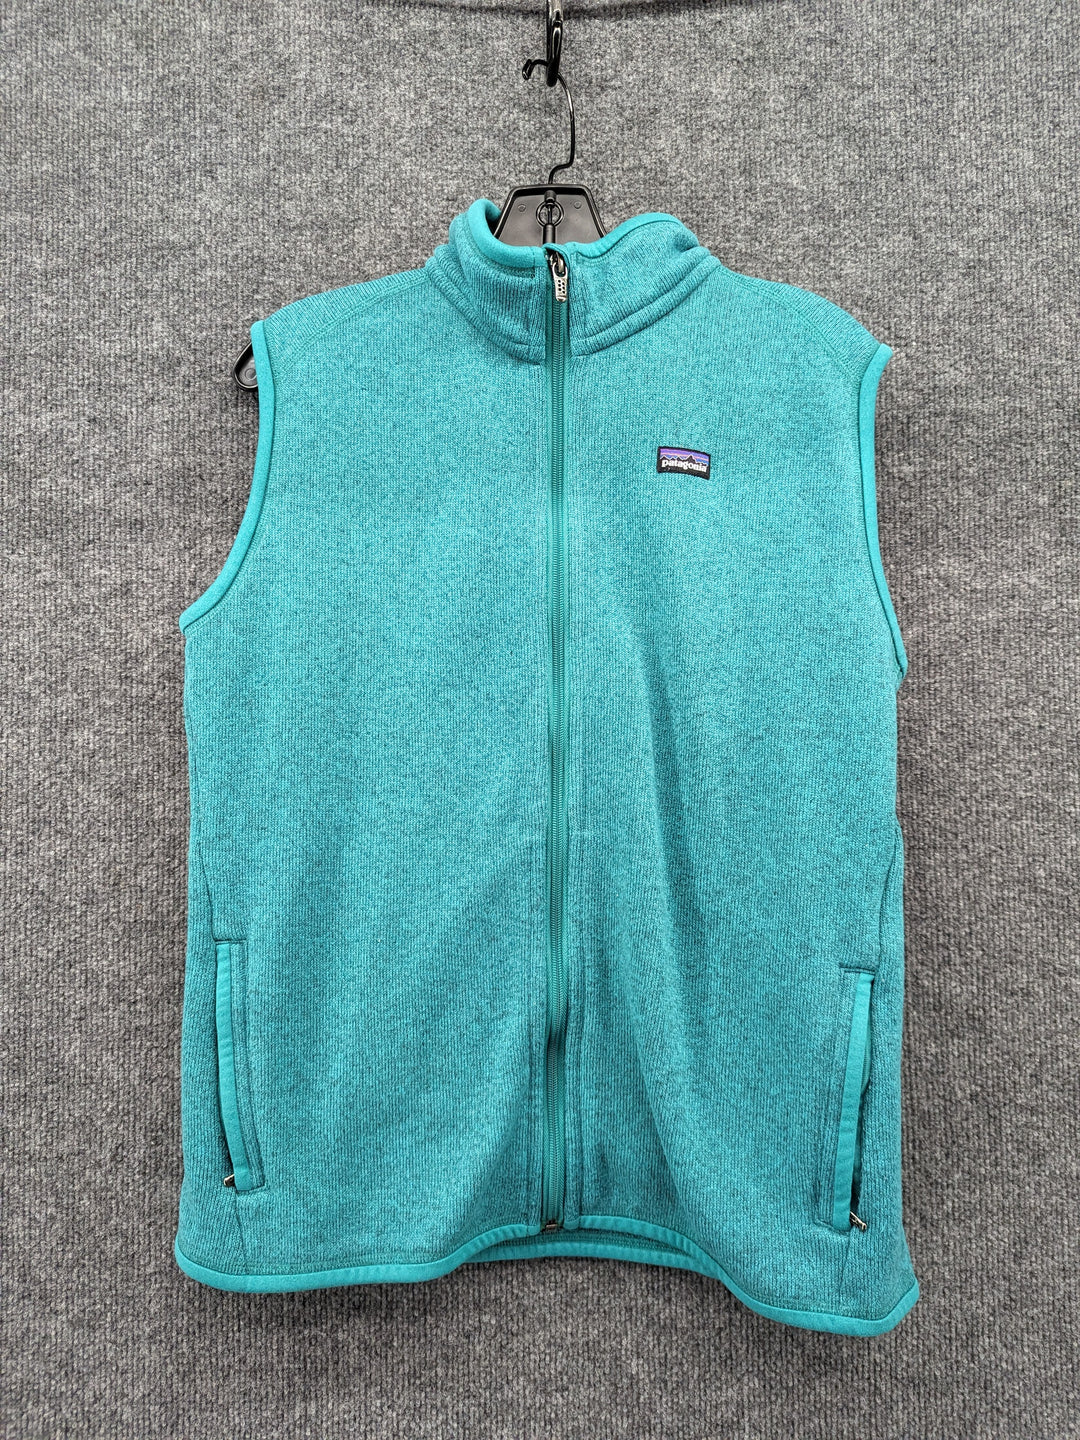 Patagonia Size W XL Women's Fleece Vest